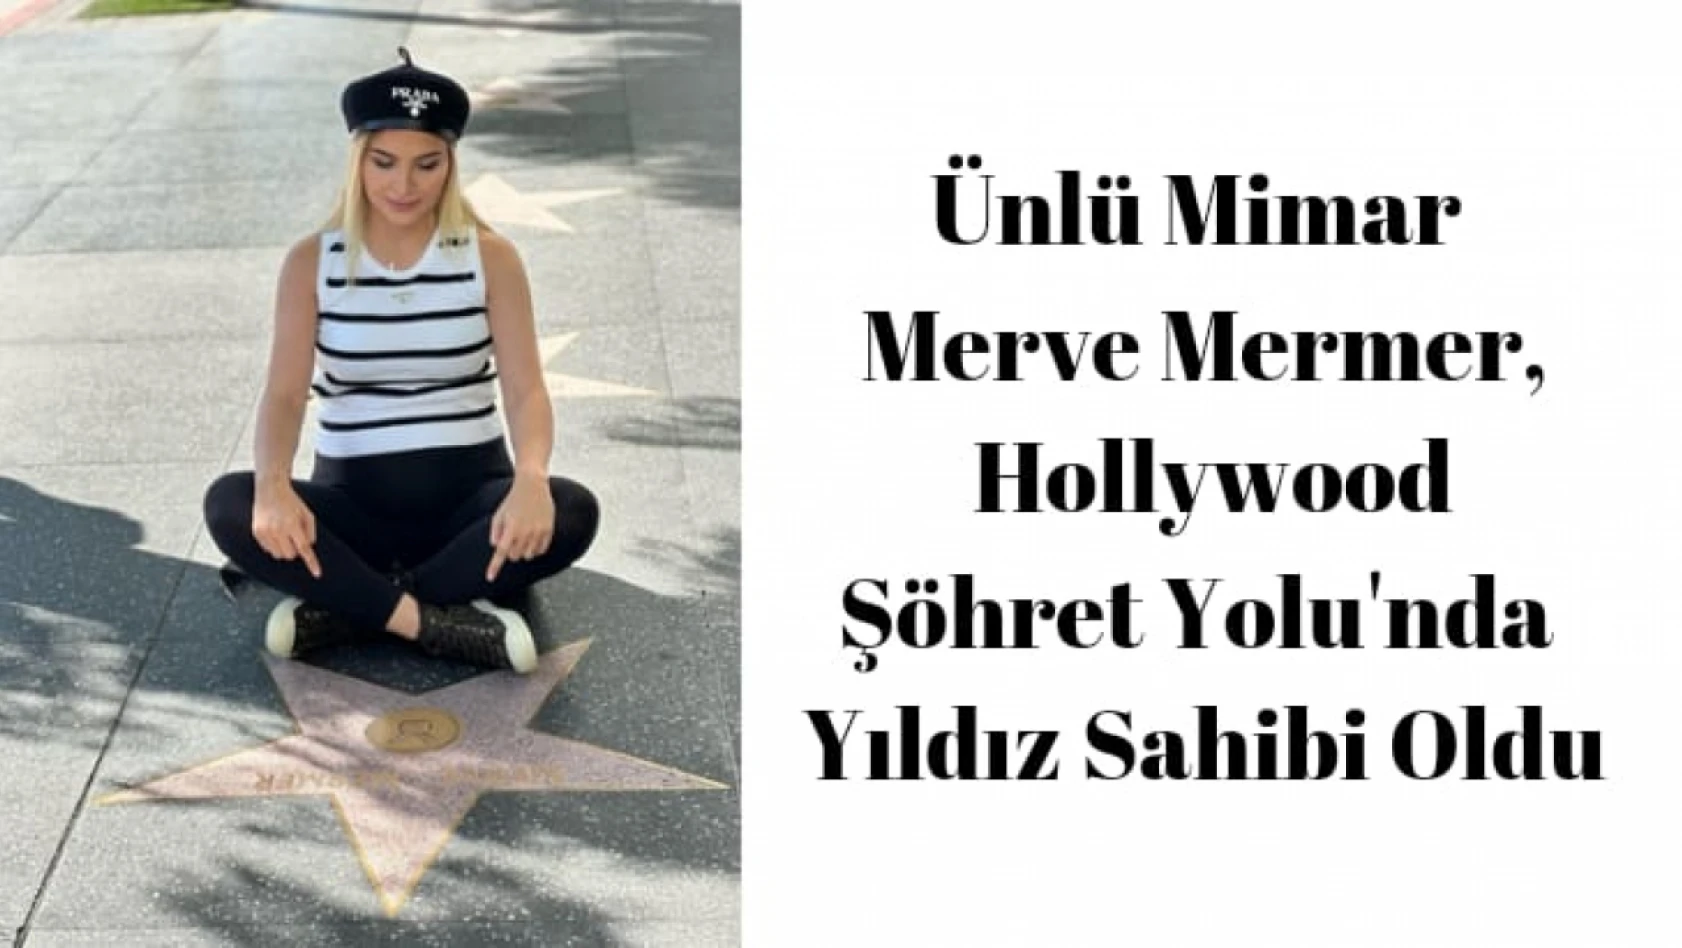 Ünlü Mimar Merve Mermer, Hollywood Şöhret Yolu'nda Yıldız Sahibi Oldu